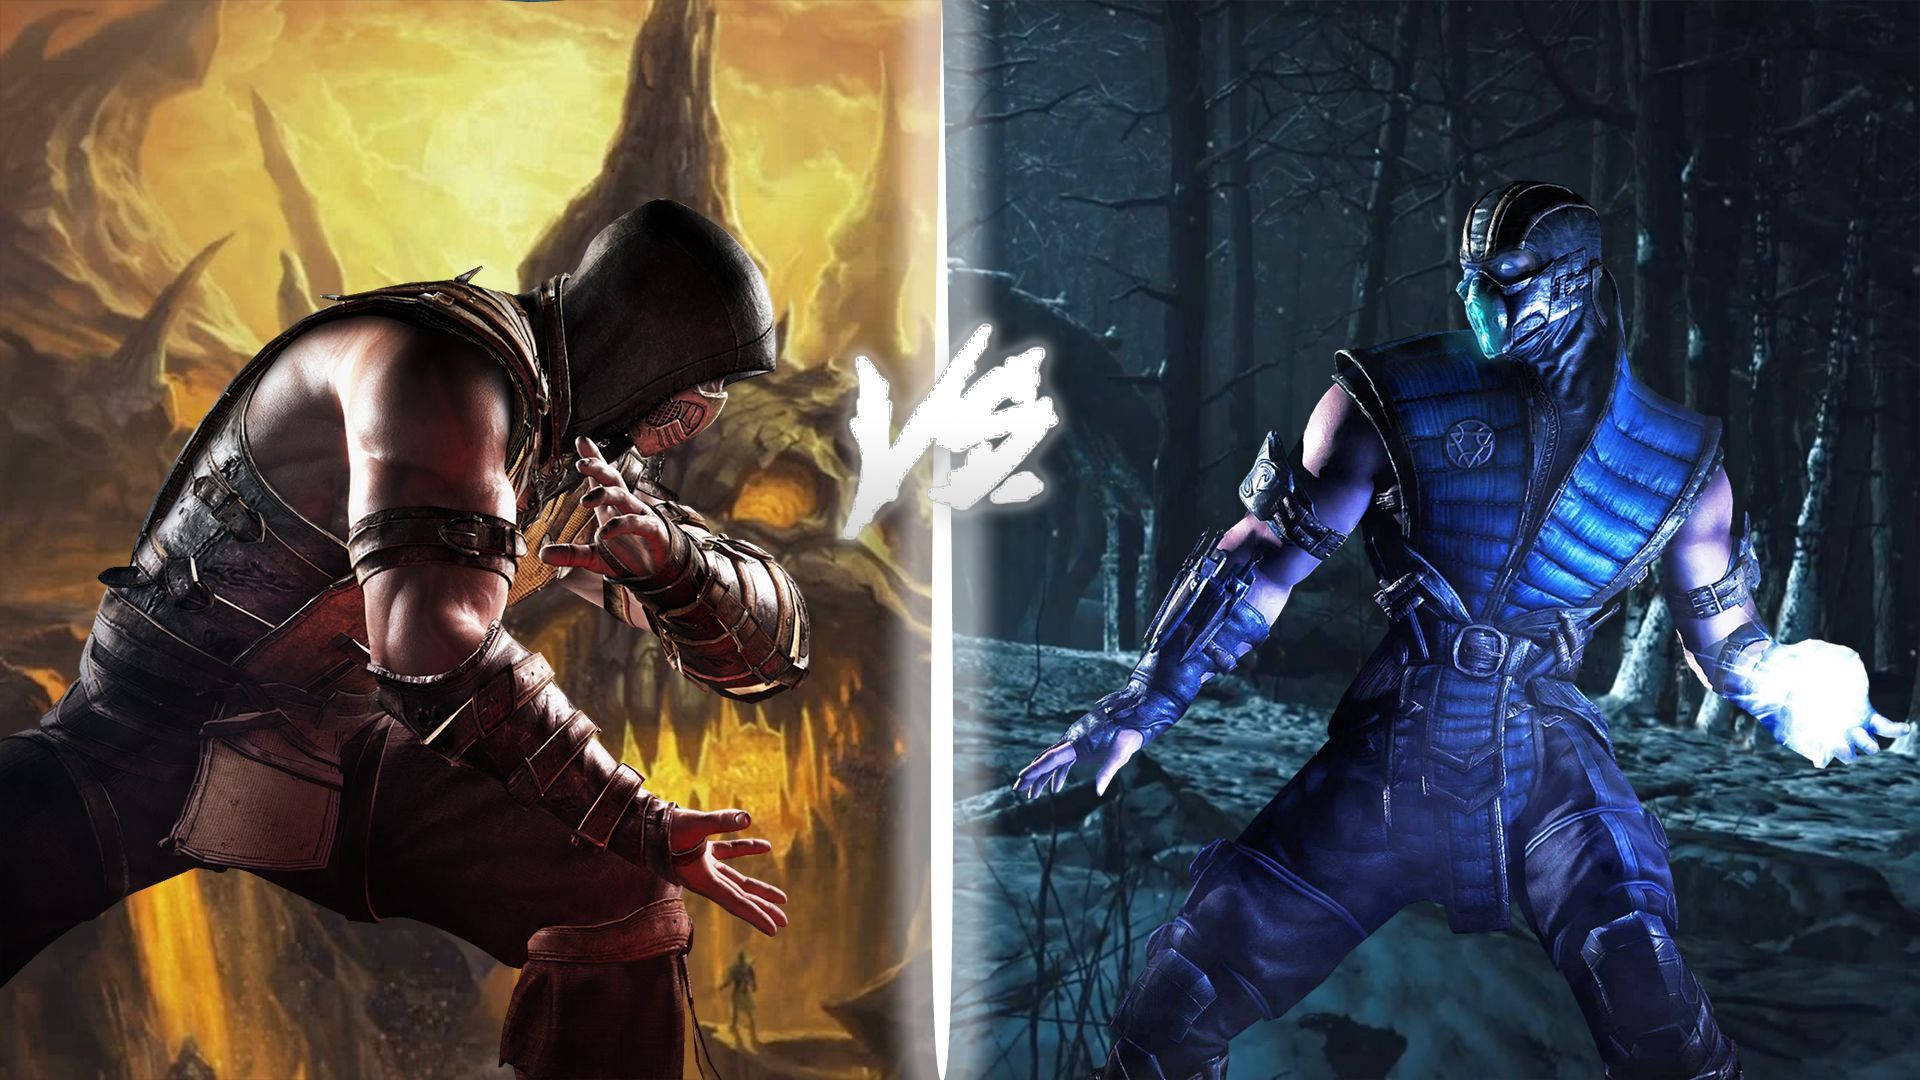 Mortal Kombat Scorpion Vs Sub Zero Battle Position Wallpaper